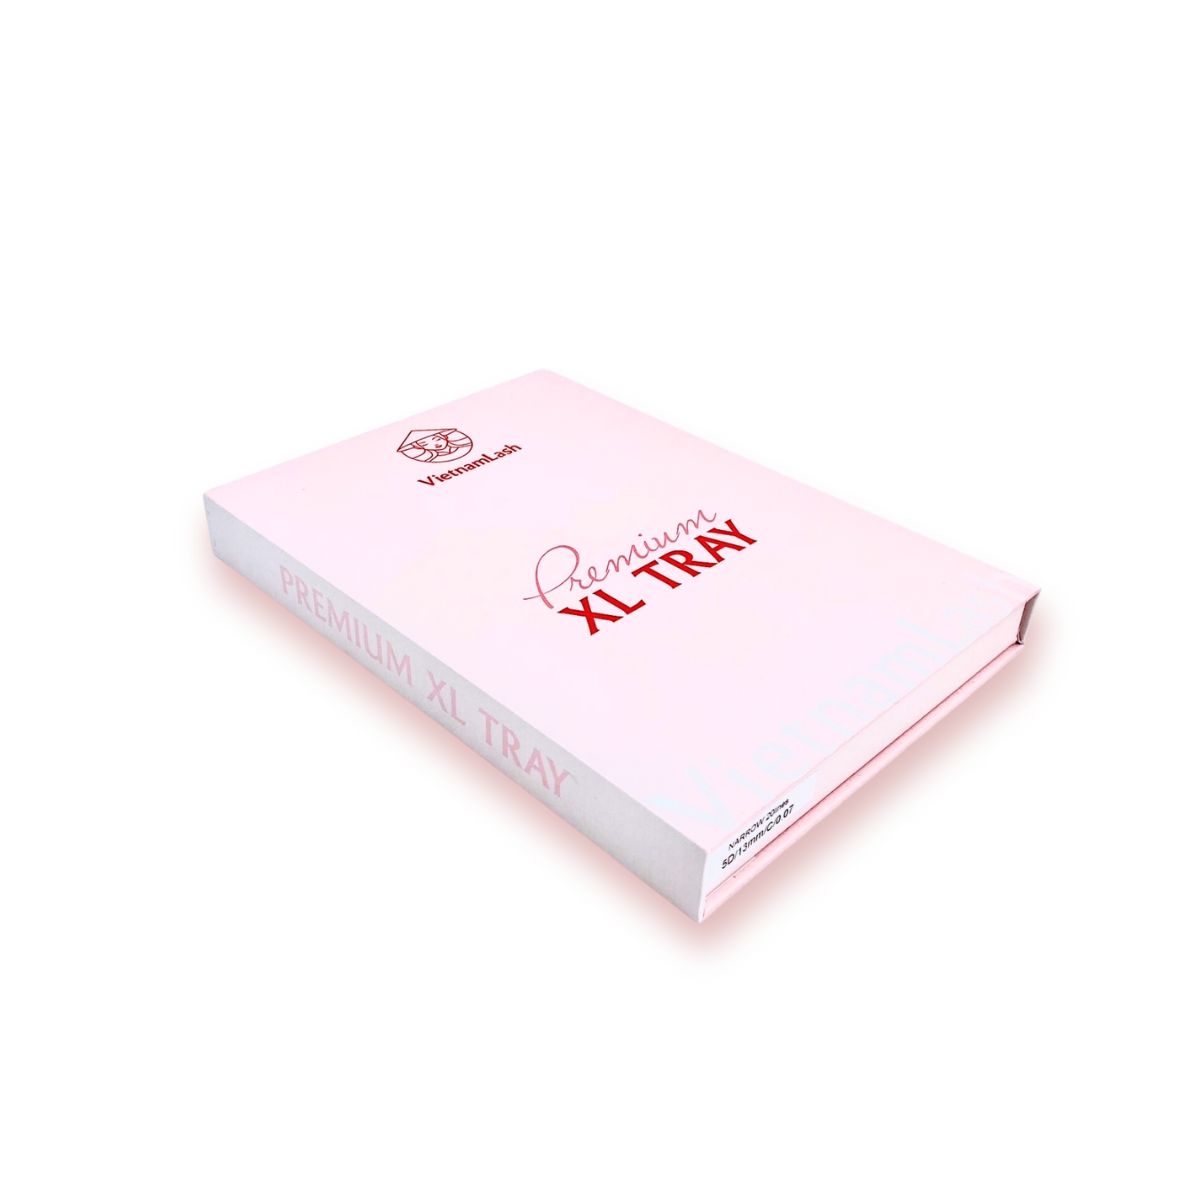 vietnamlash premium XL box